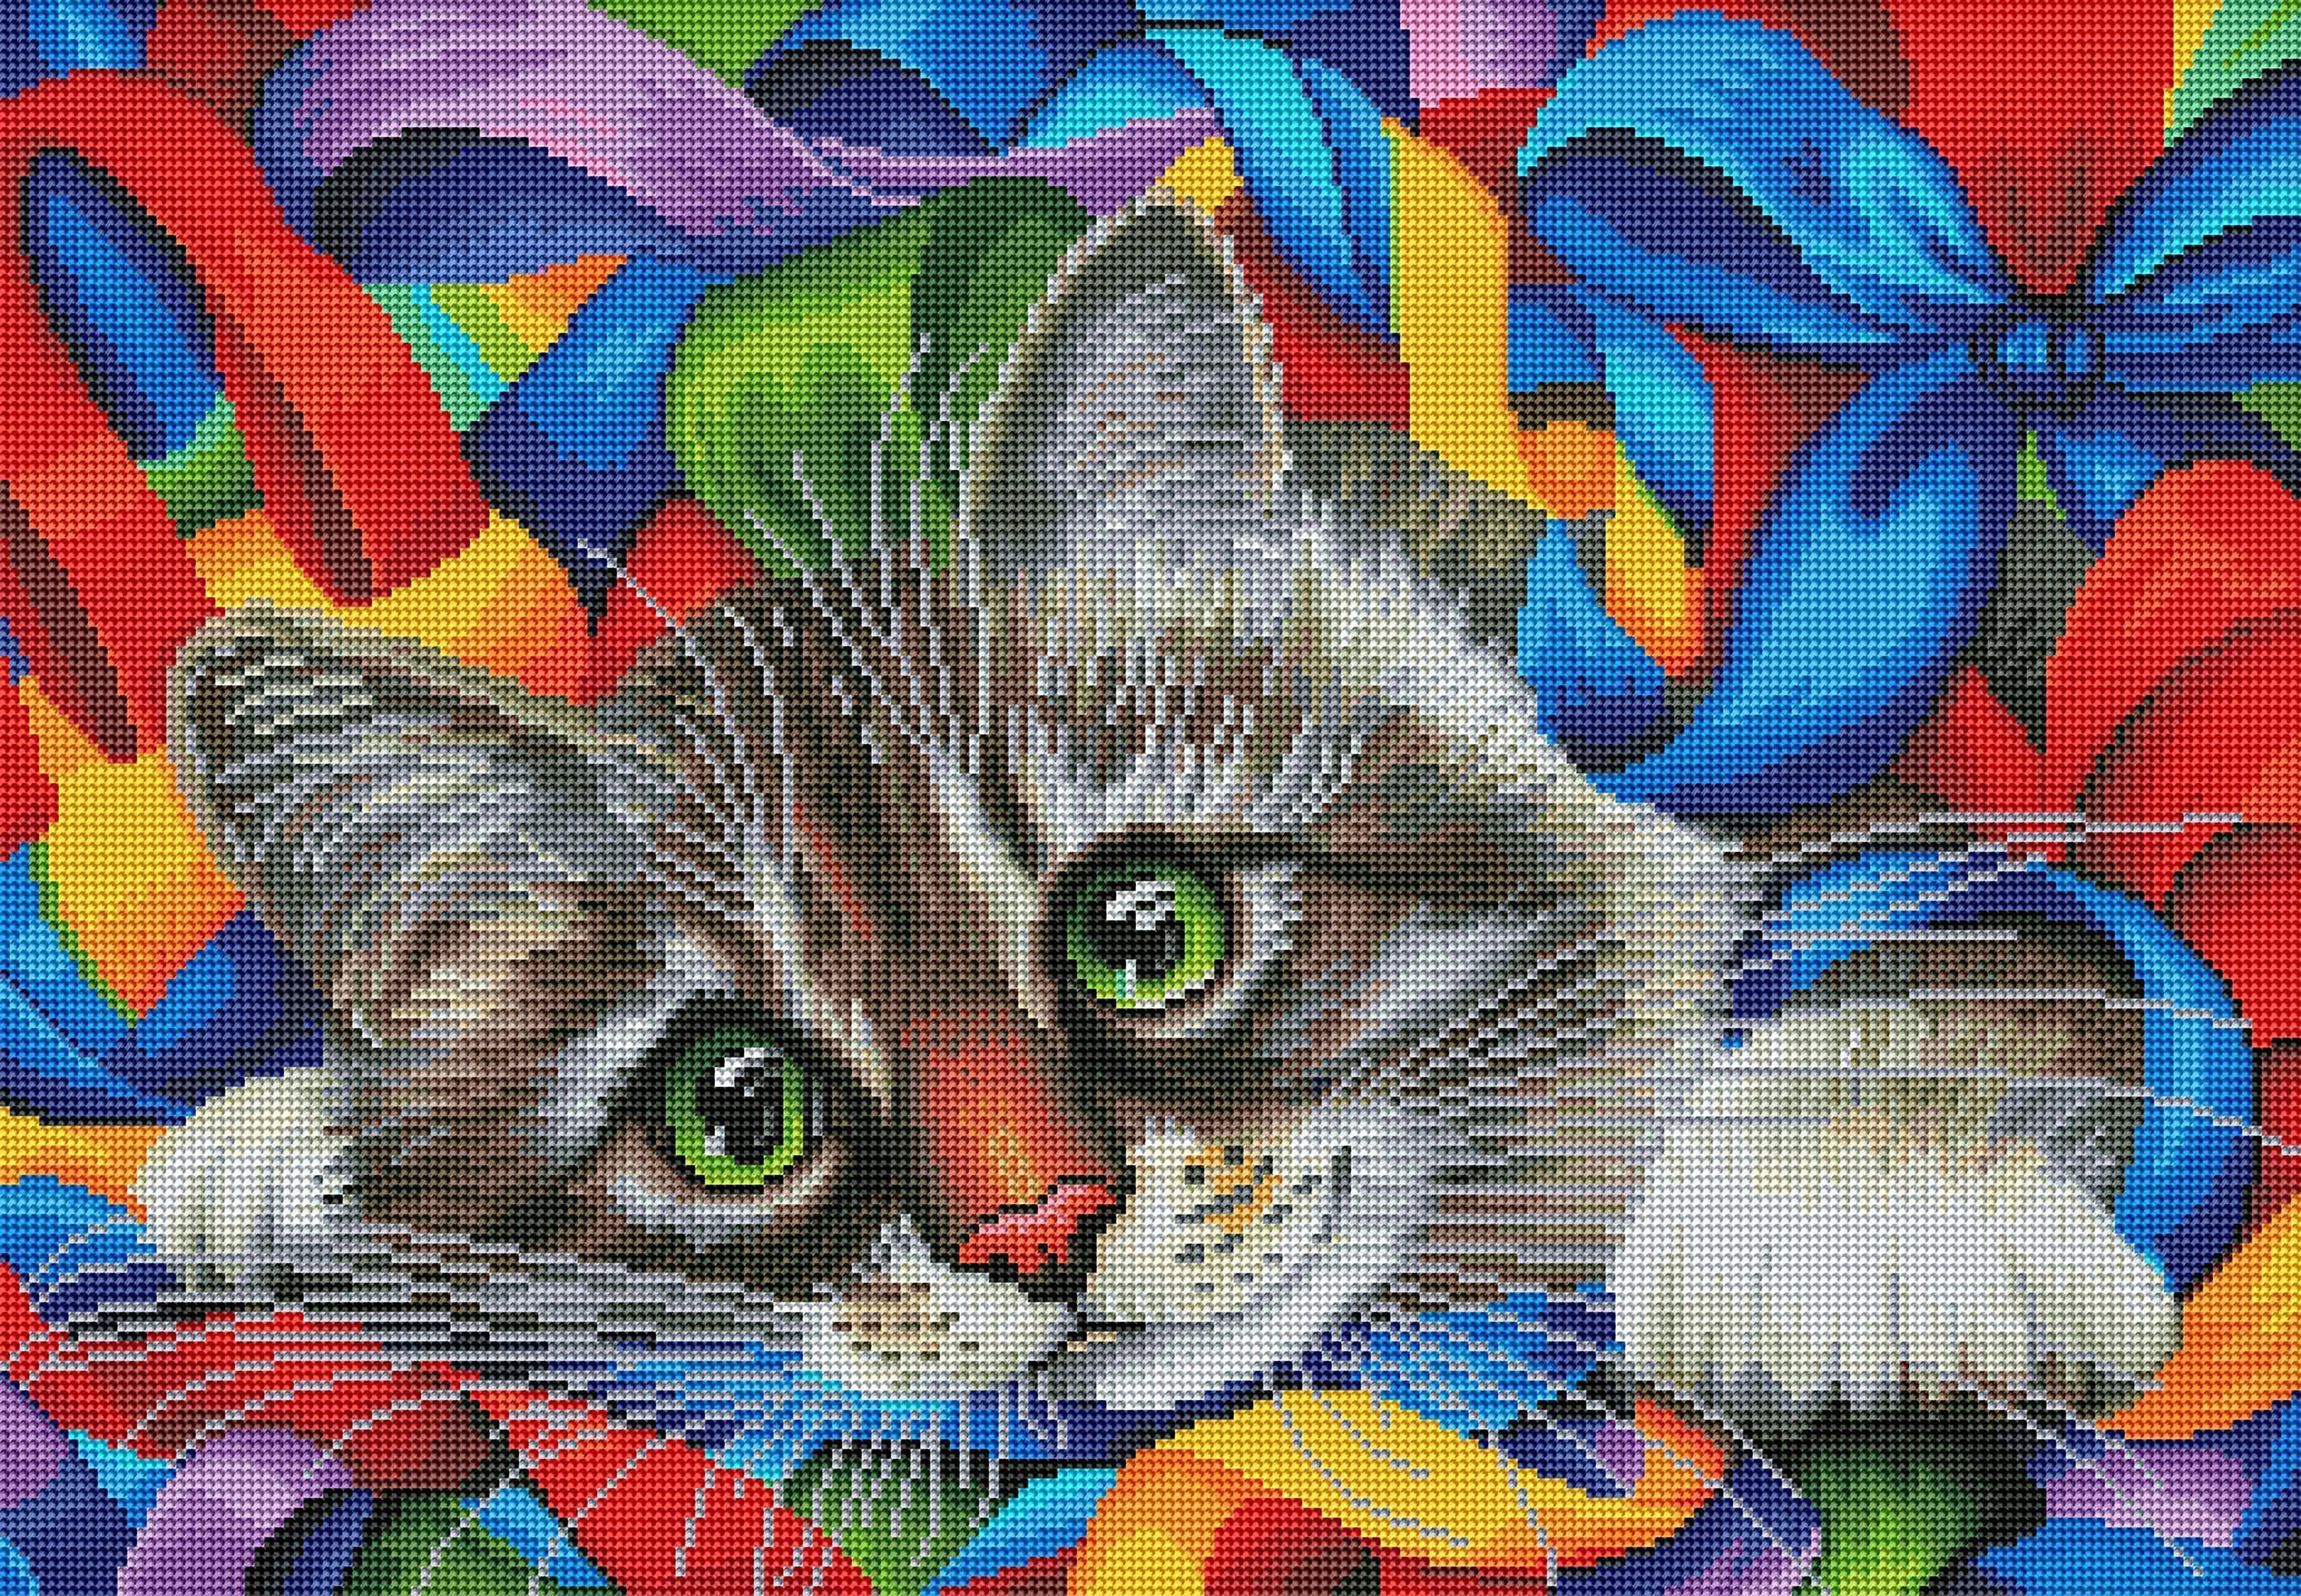 Kitten Party Premium DIY Diamond Painting Kit - Cat Collection